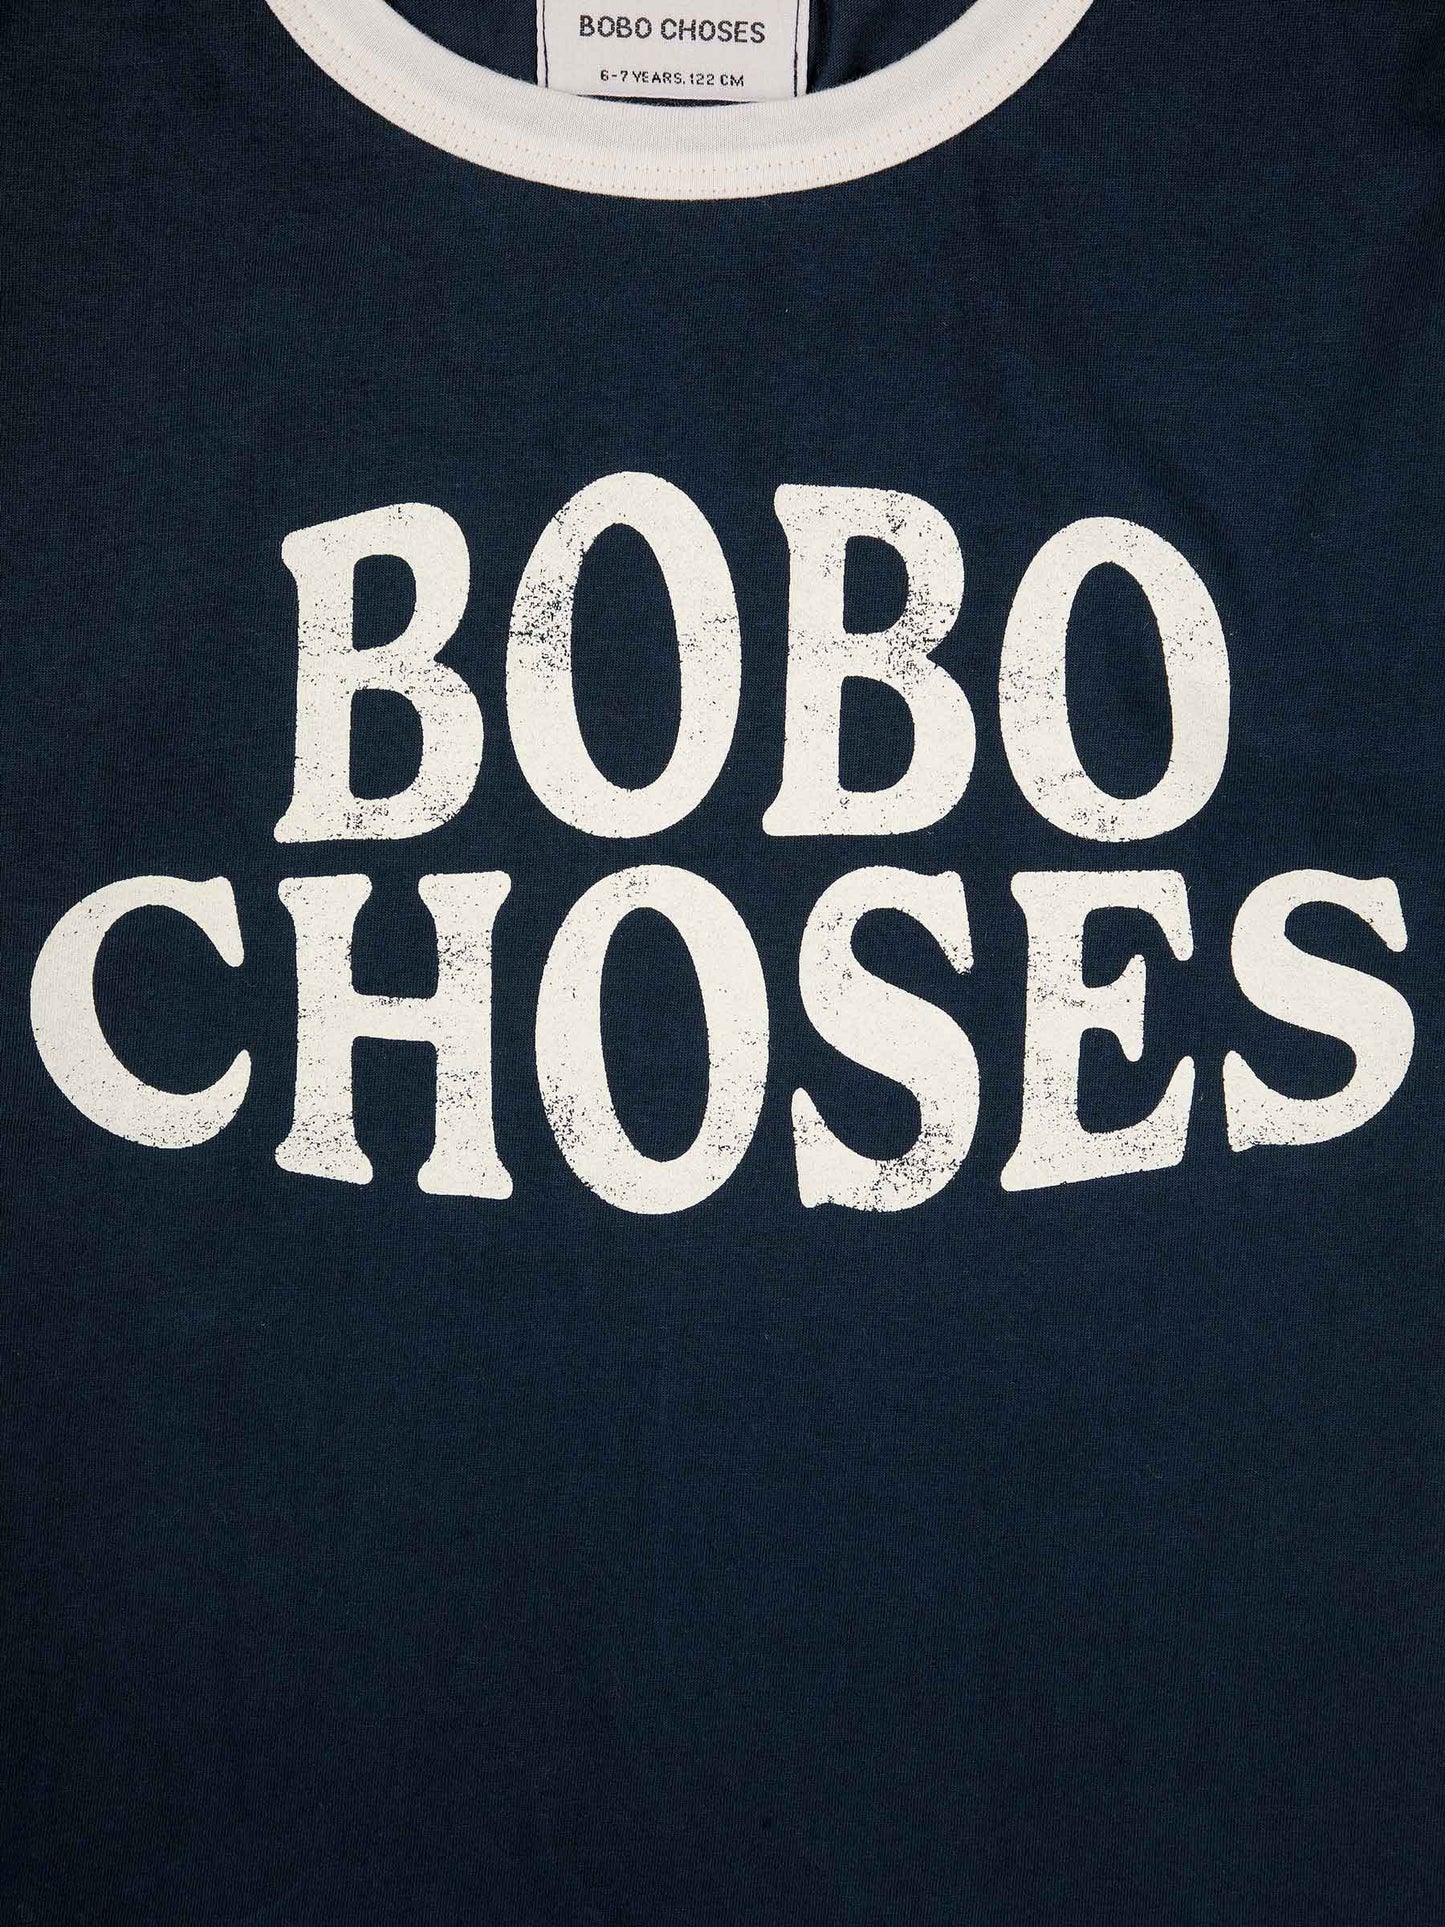 Bobo Choses navy blue T-shirt